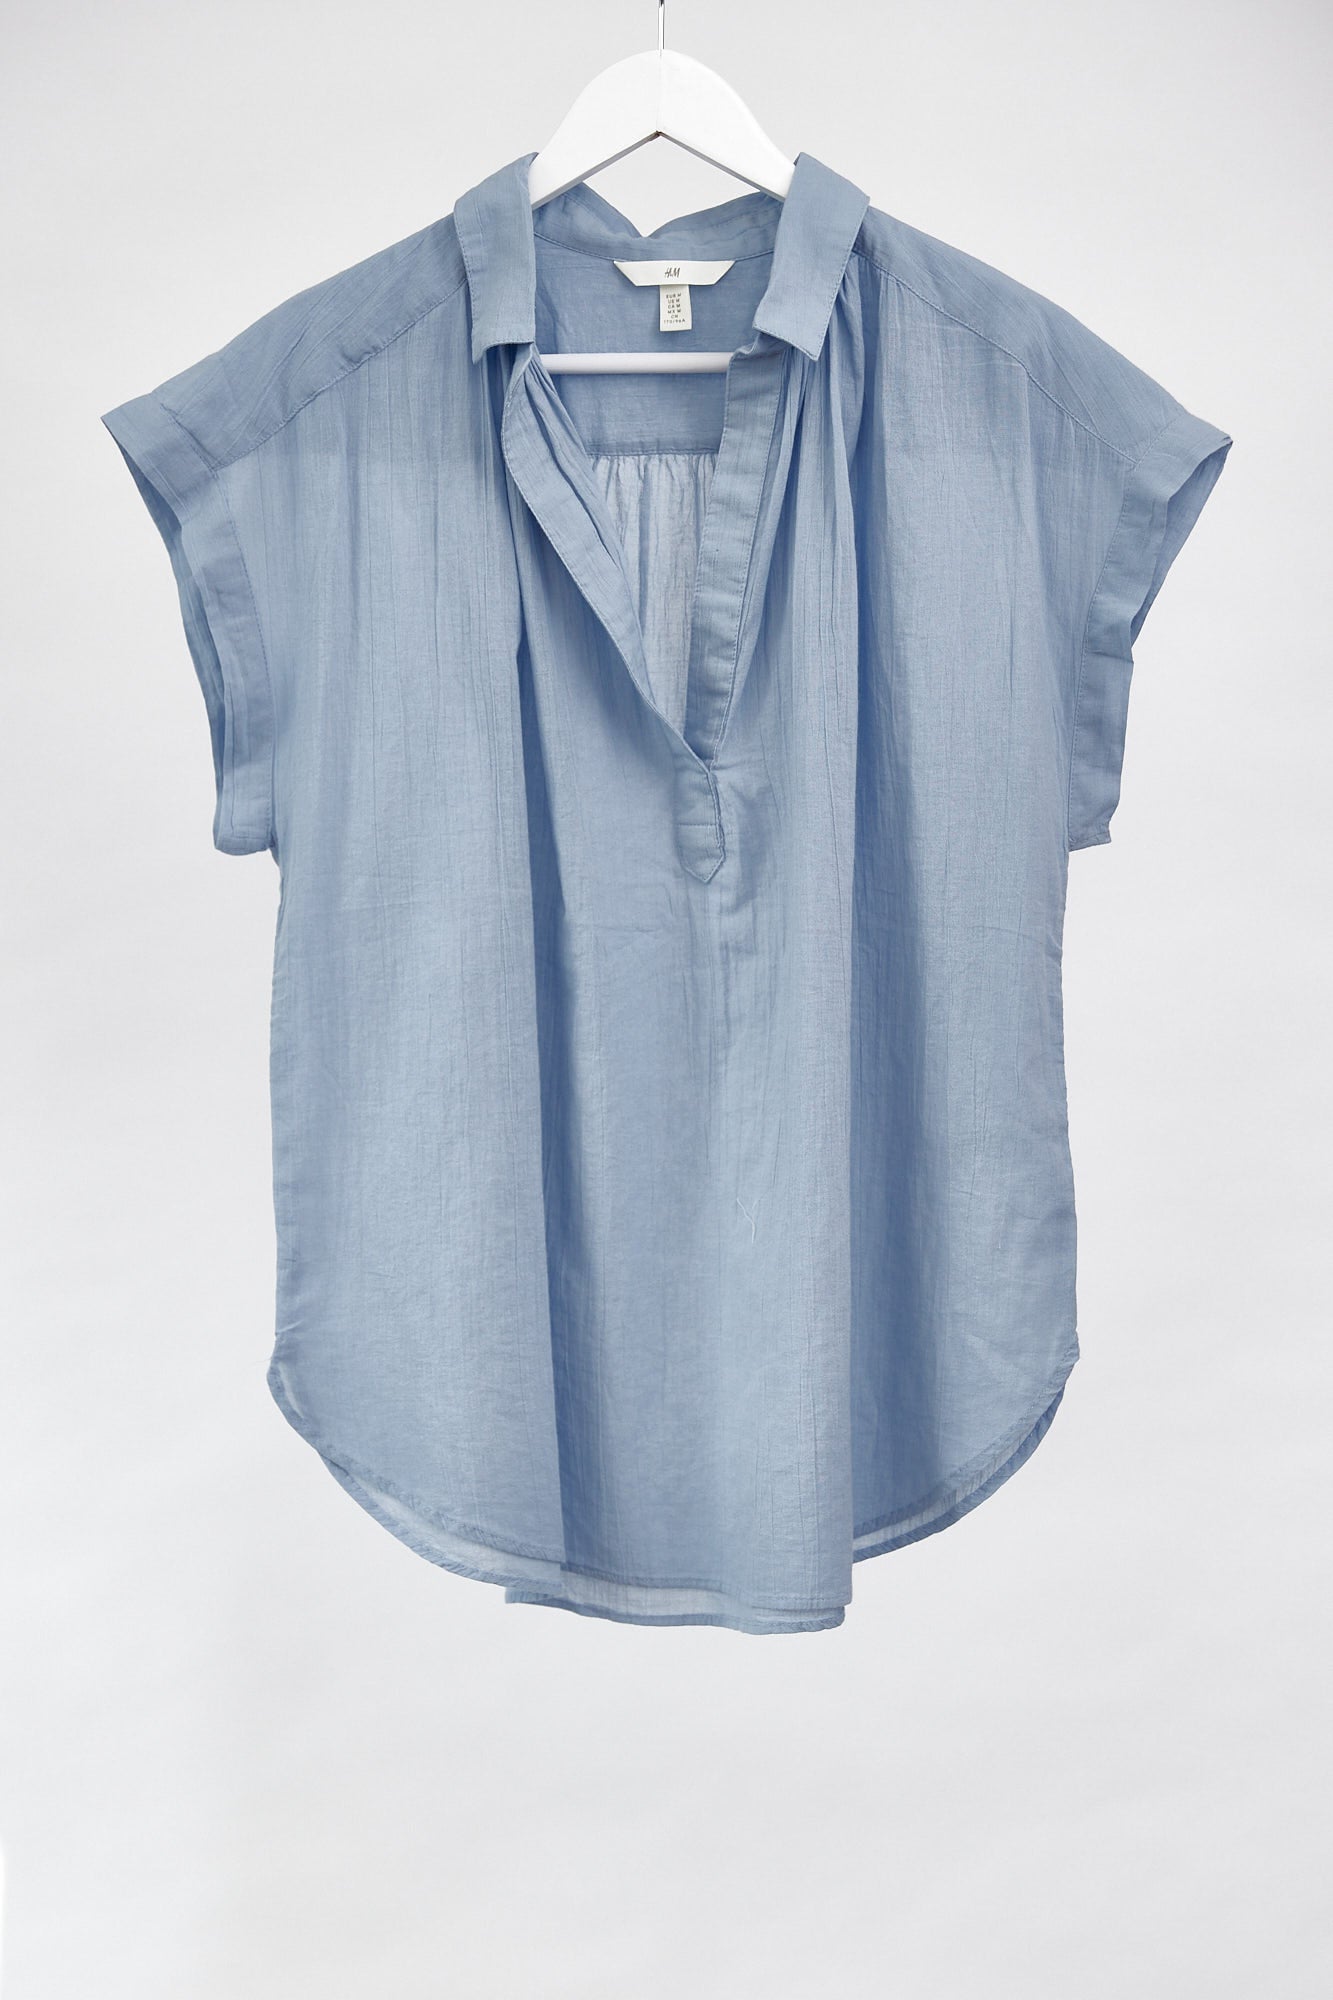 Womens H&M sleeveless blue blouse size medium